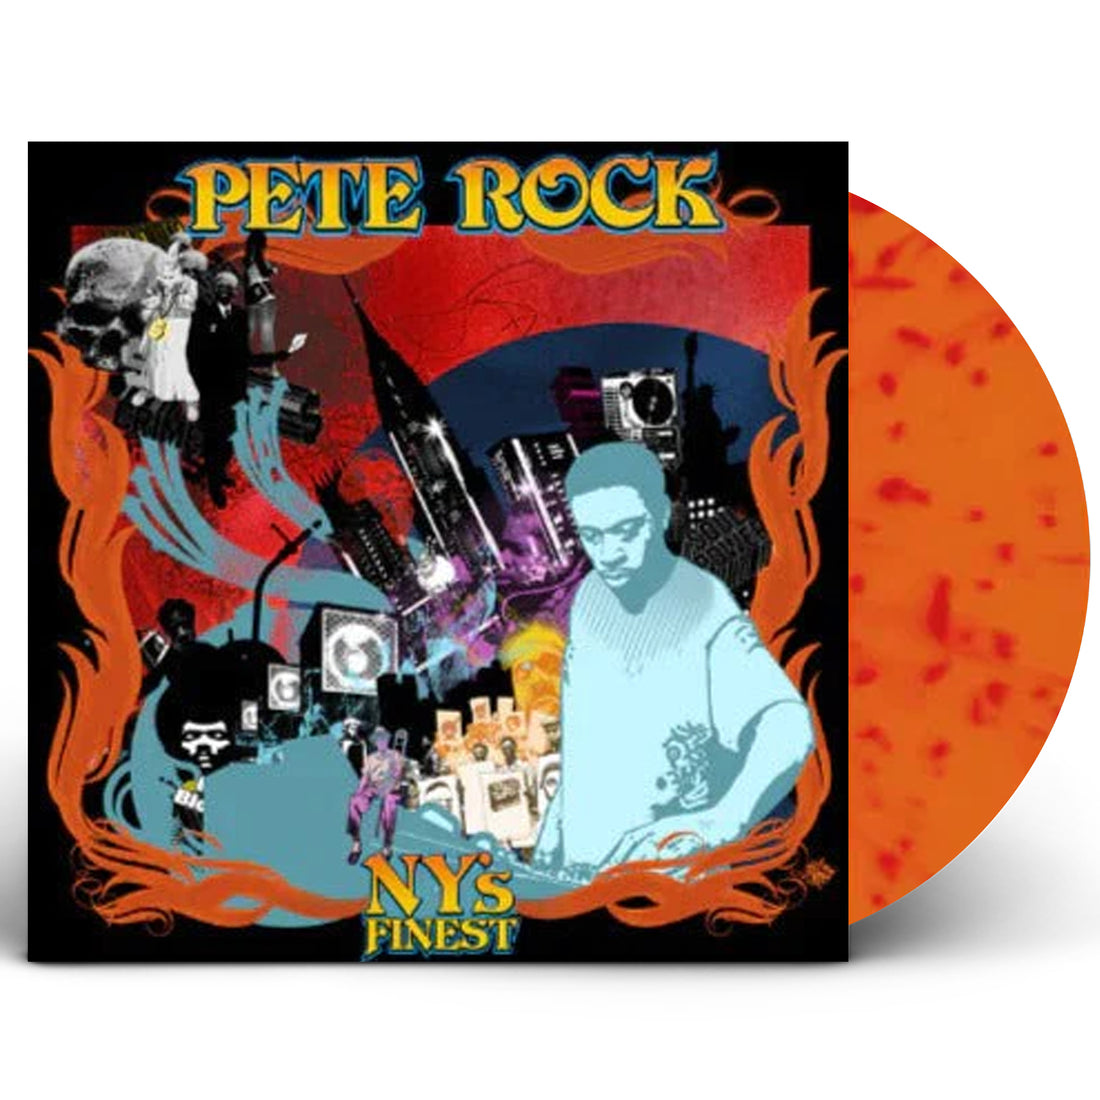 Pete Rock "NY’s Finest" Orange Splatter Vinyl LP